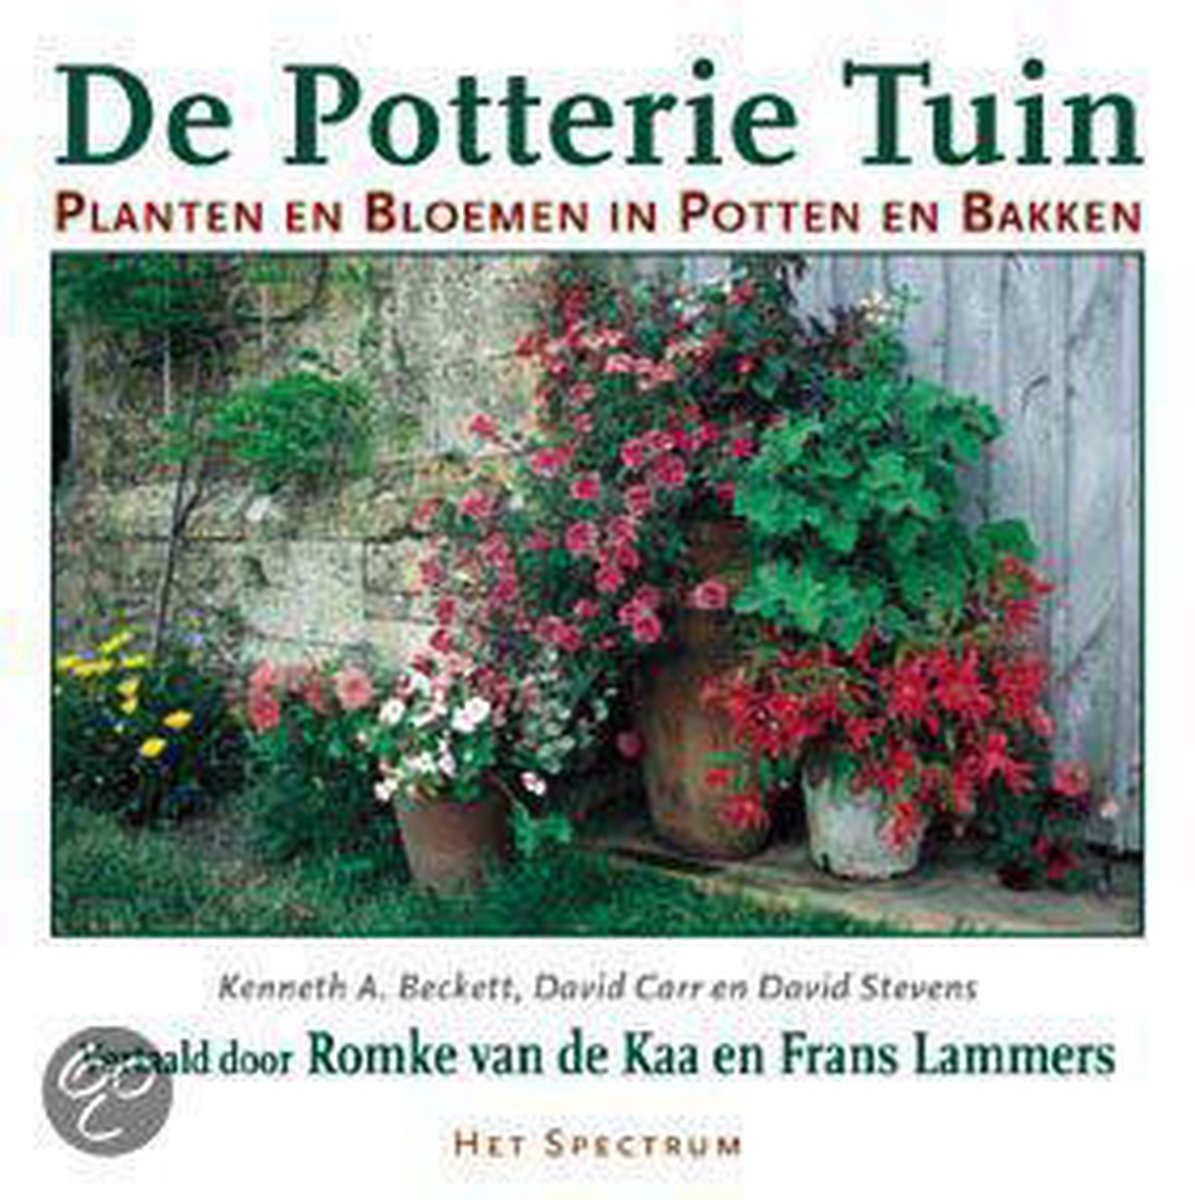 De potterie tuin / Spectrum natuurgids